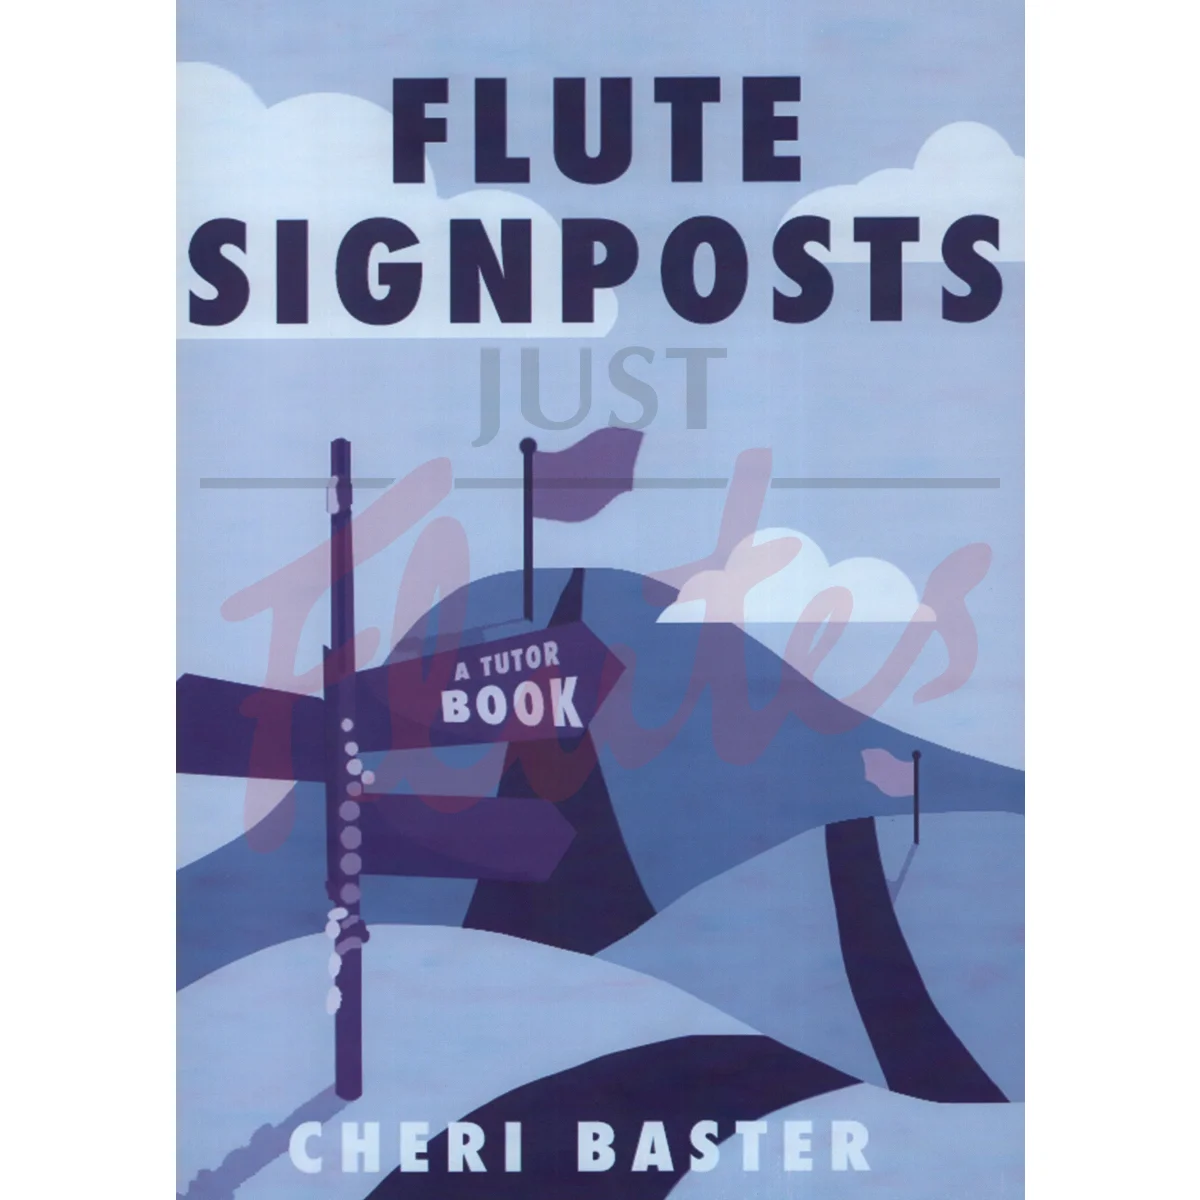 Flute Signposts